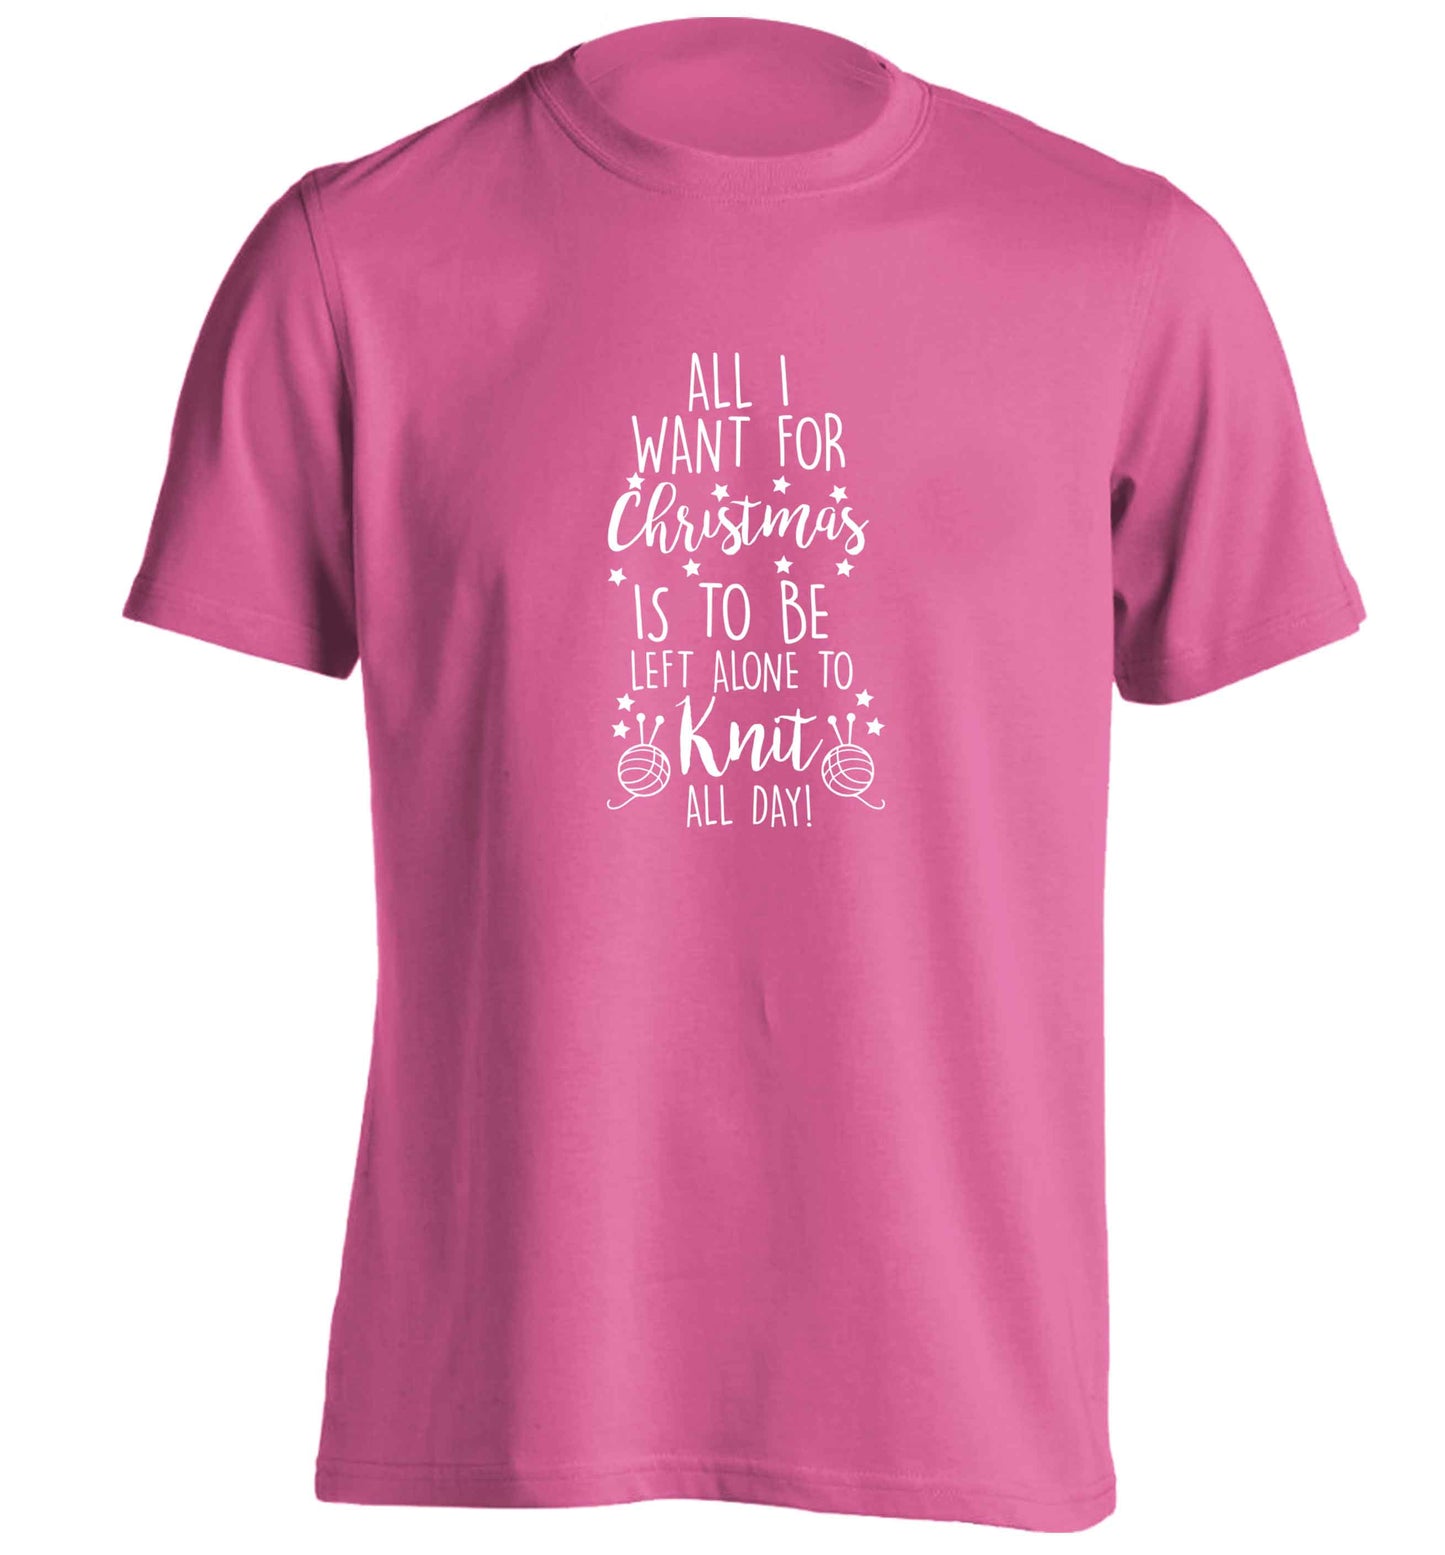 Merry Christmas adults unisex pink Tshirt 2XL